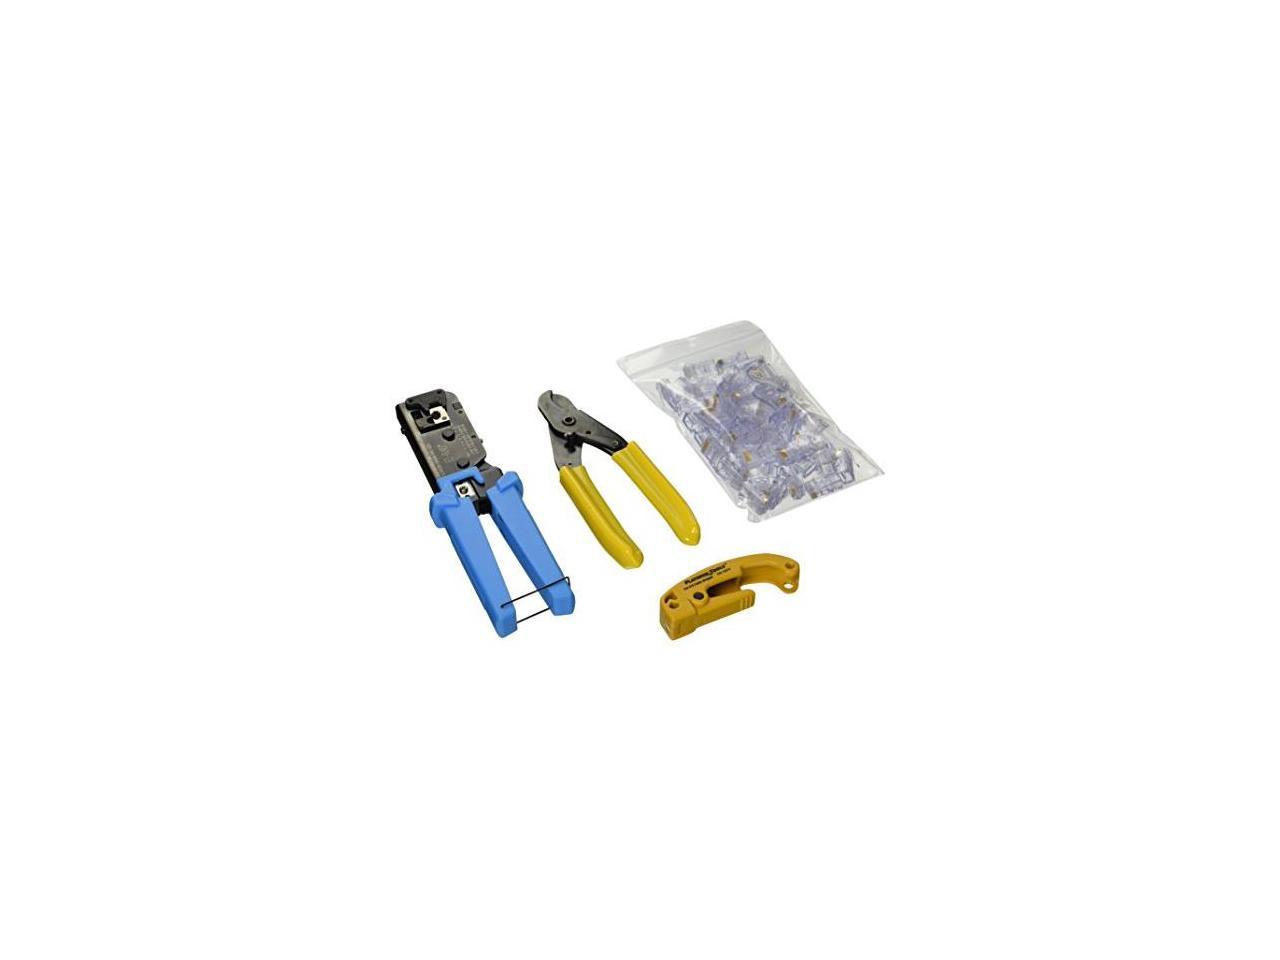 Platinum Tools 100012, RJ-45 Installation Kit Includes Crimper/Cutter, Jacket Stripper, RJ-45 EZ Connectors